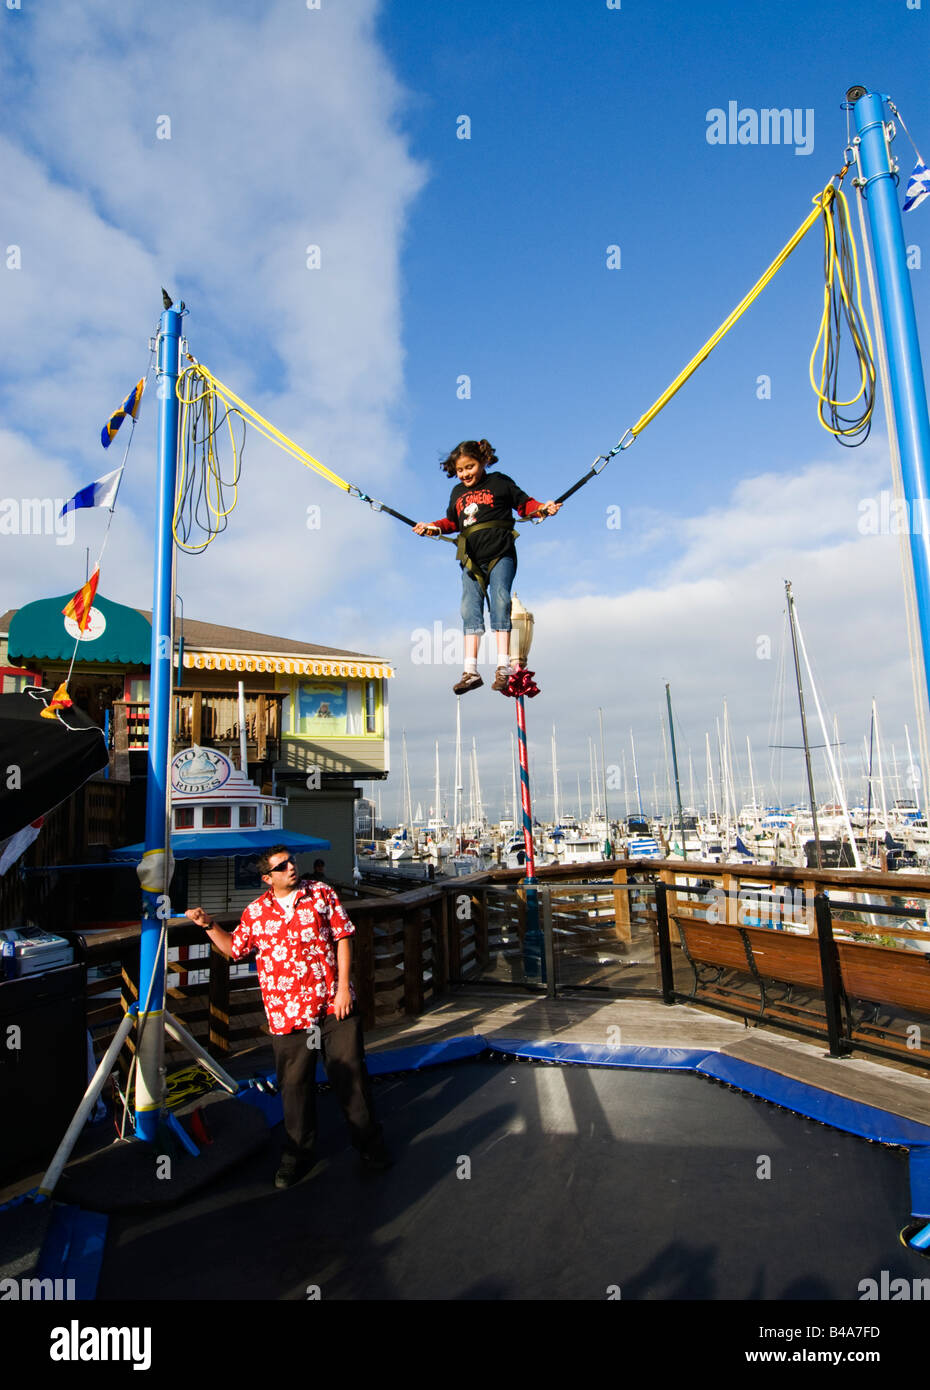 California San Francisco Trampoline entertainment at Pier 39 Photo 14  casanf76028 Photo Lee Foster 2008 Stock Photo - Alamy